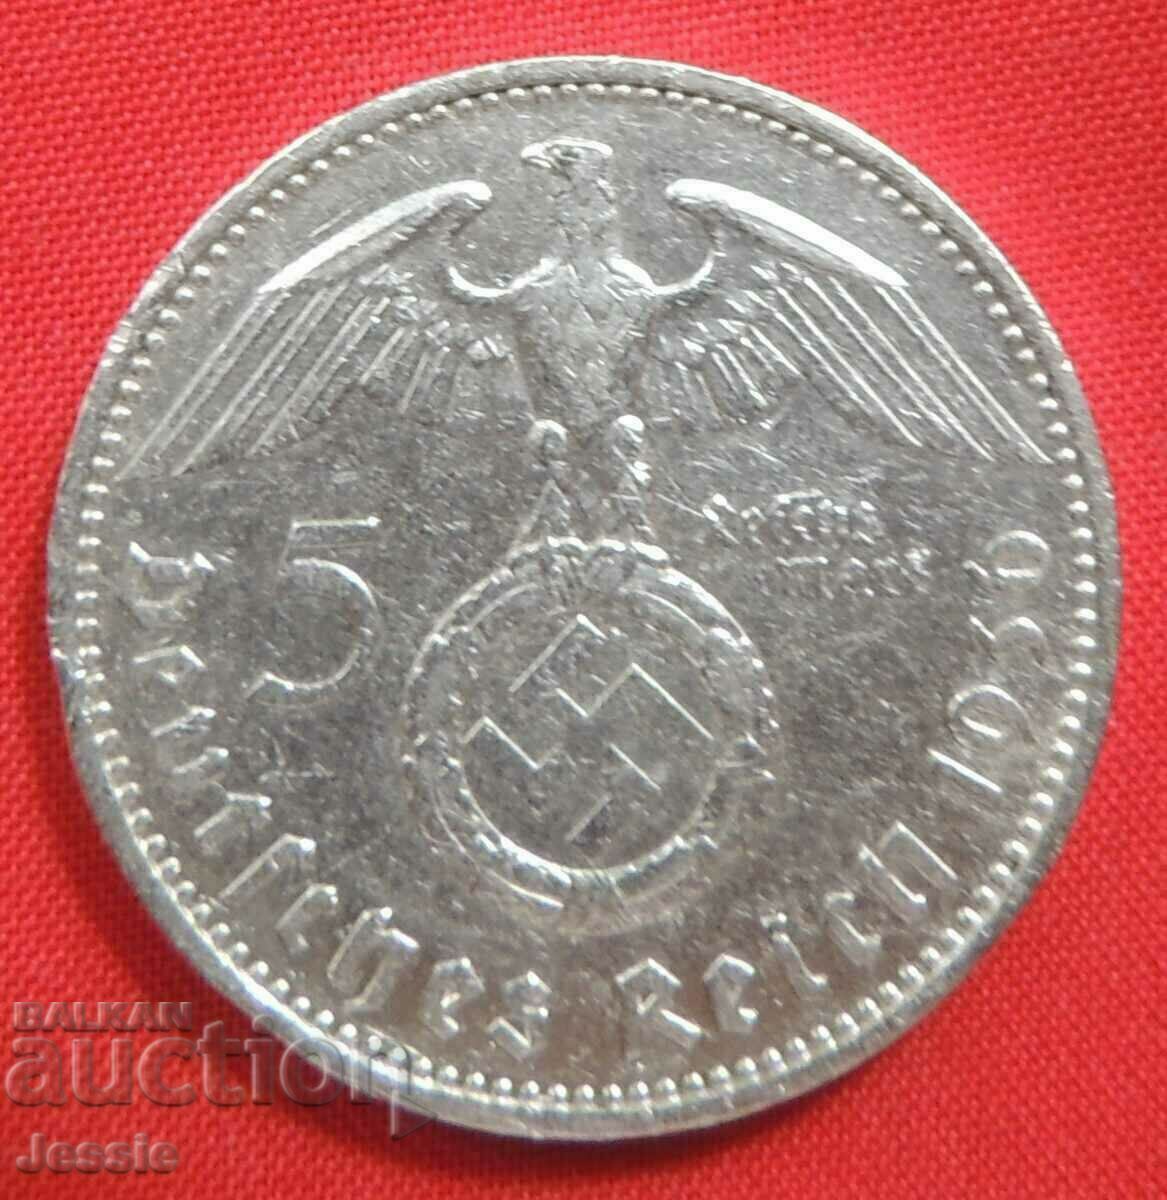 5 Reichsmarks 1936 F Germania argint